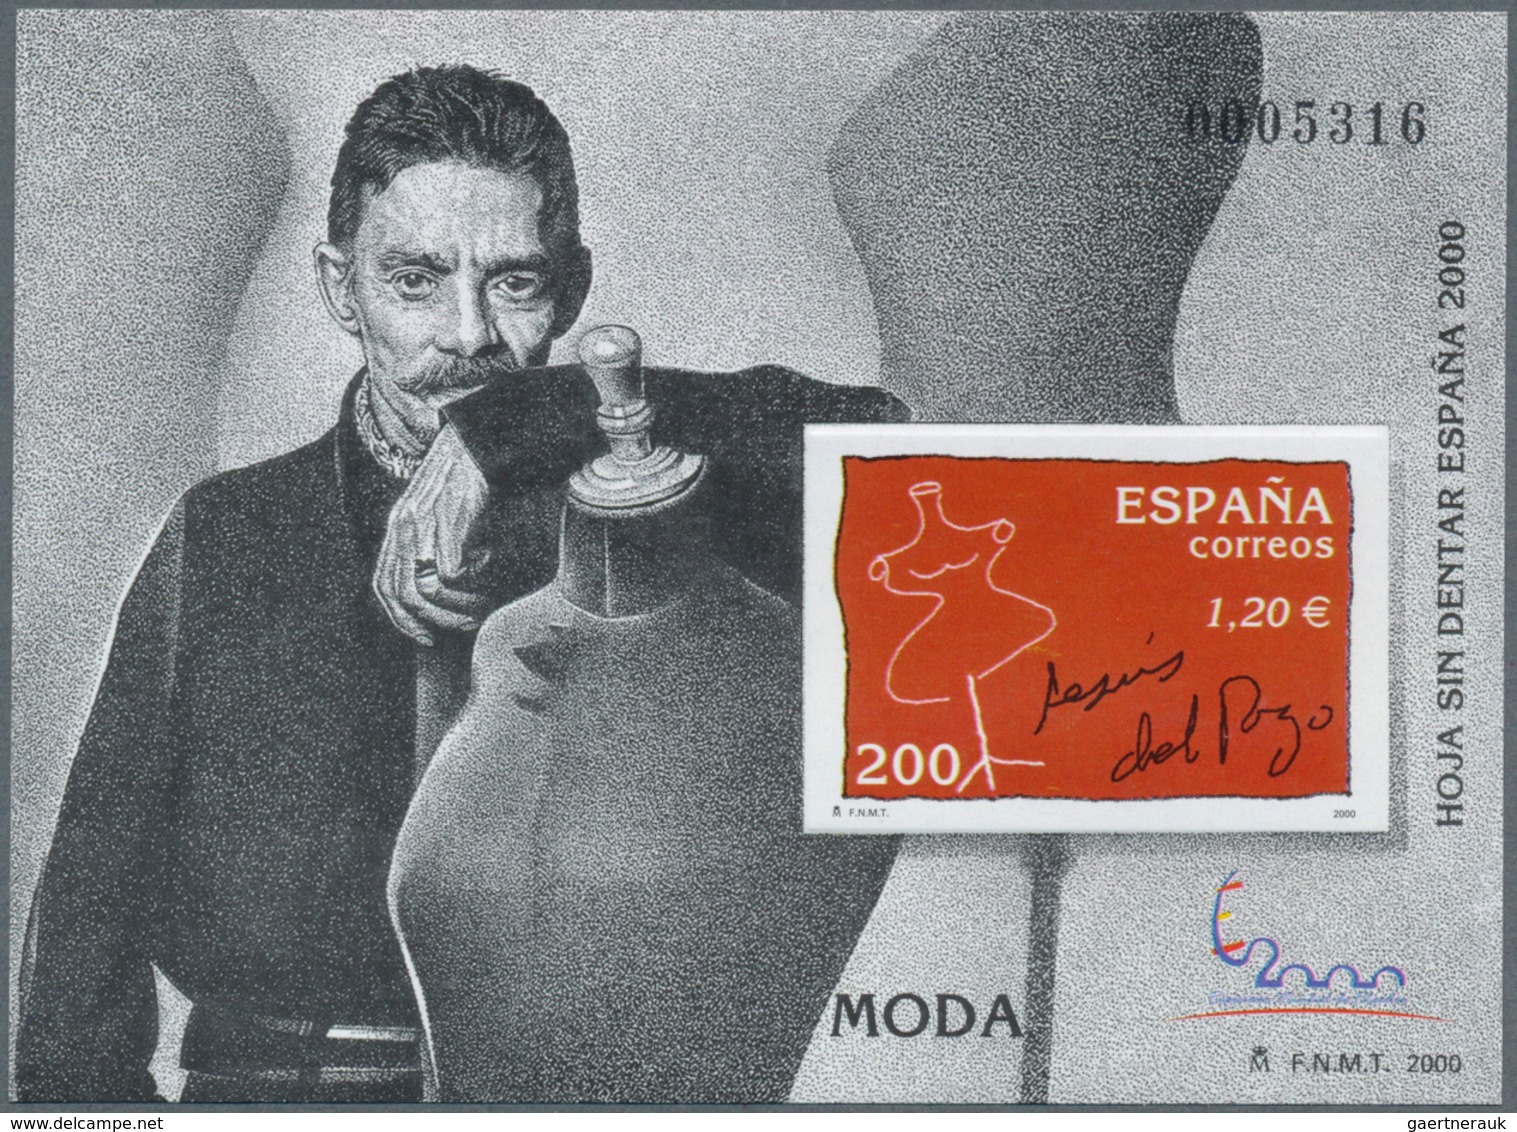 Spanien: 2000. Espana 2000 Intl. Philatelic Exhibition - Set of 11 imperforate souvenir sheets overp